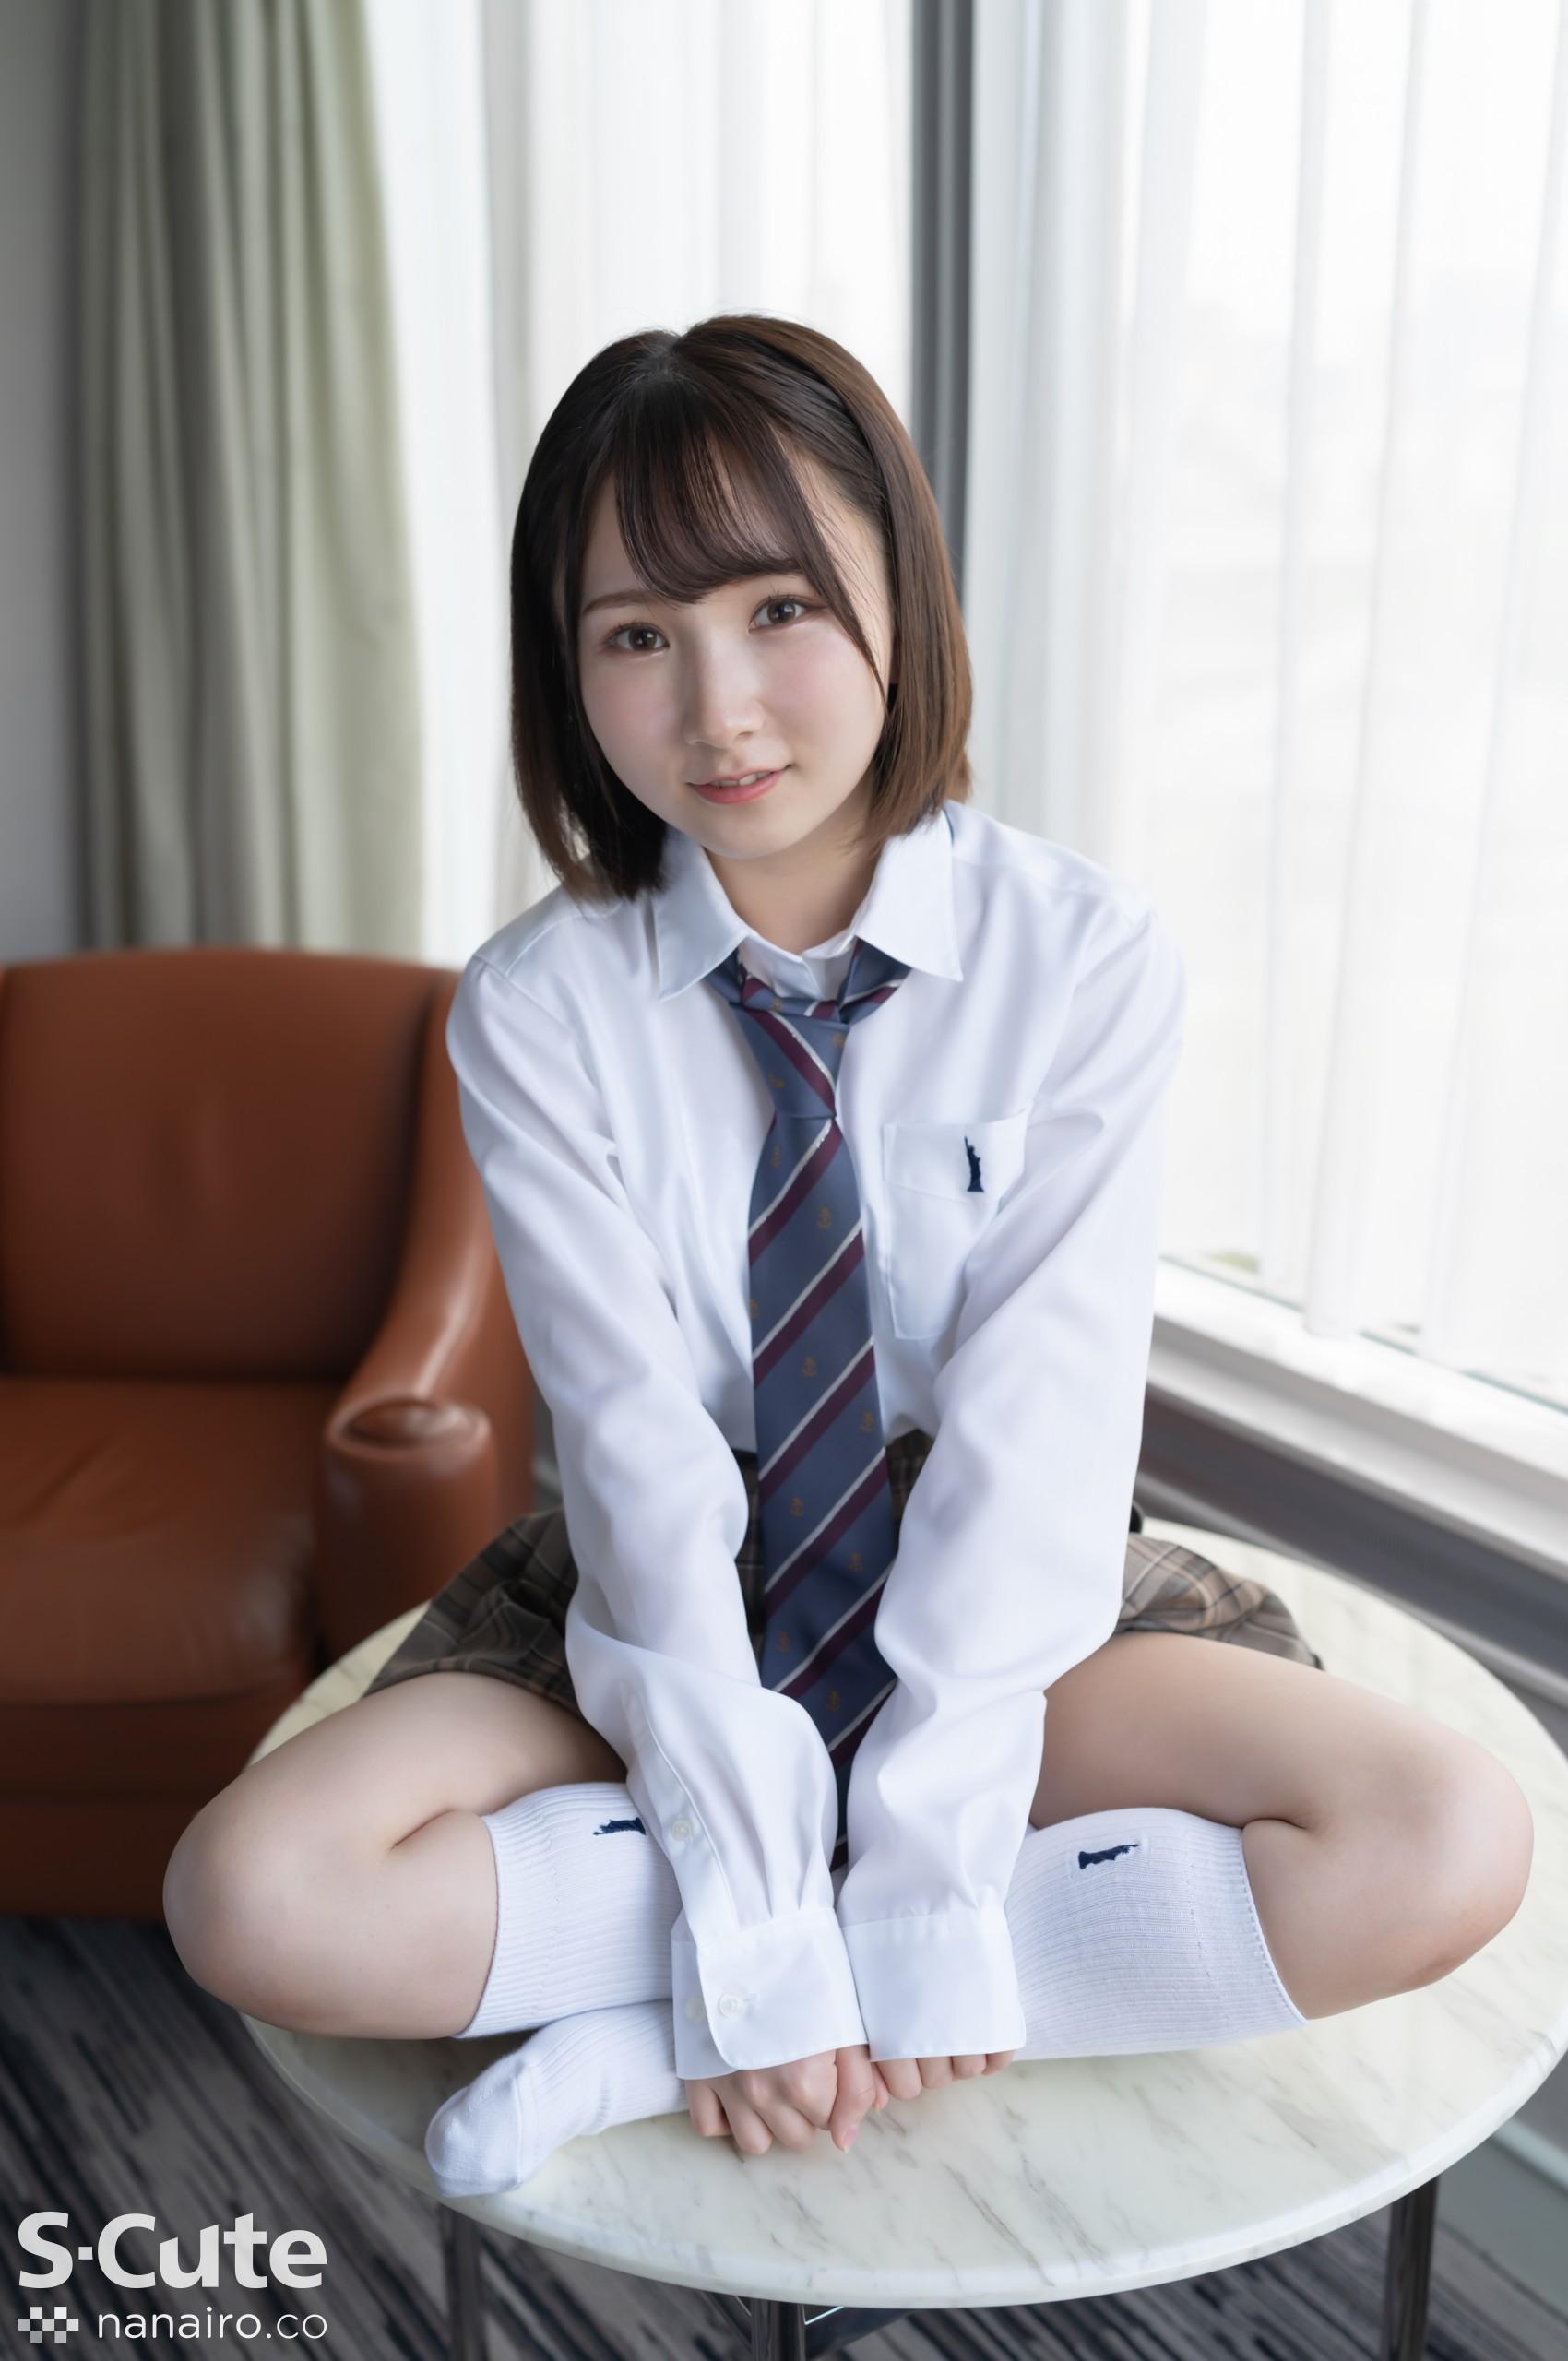 S-Cute 922_kana_02 Adult SEX / Kana إلى فتاة جميلة موحدة لا يمكن رؤيتها إلا في الخدمة الفعلية